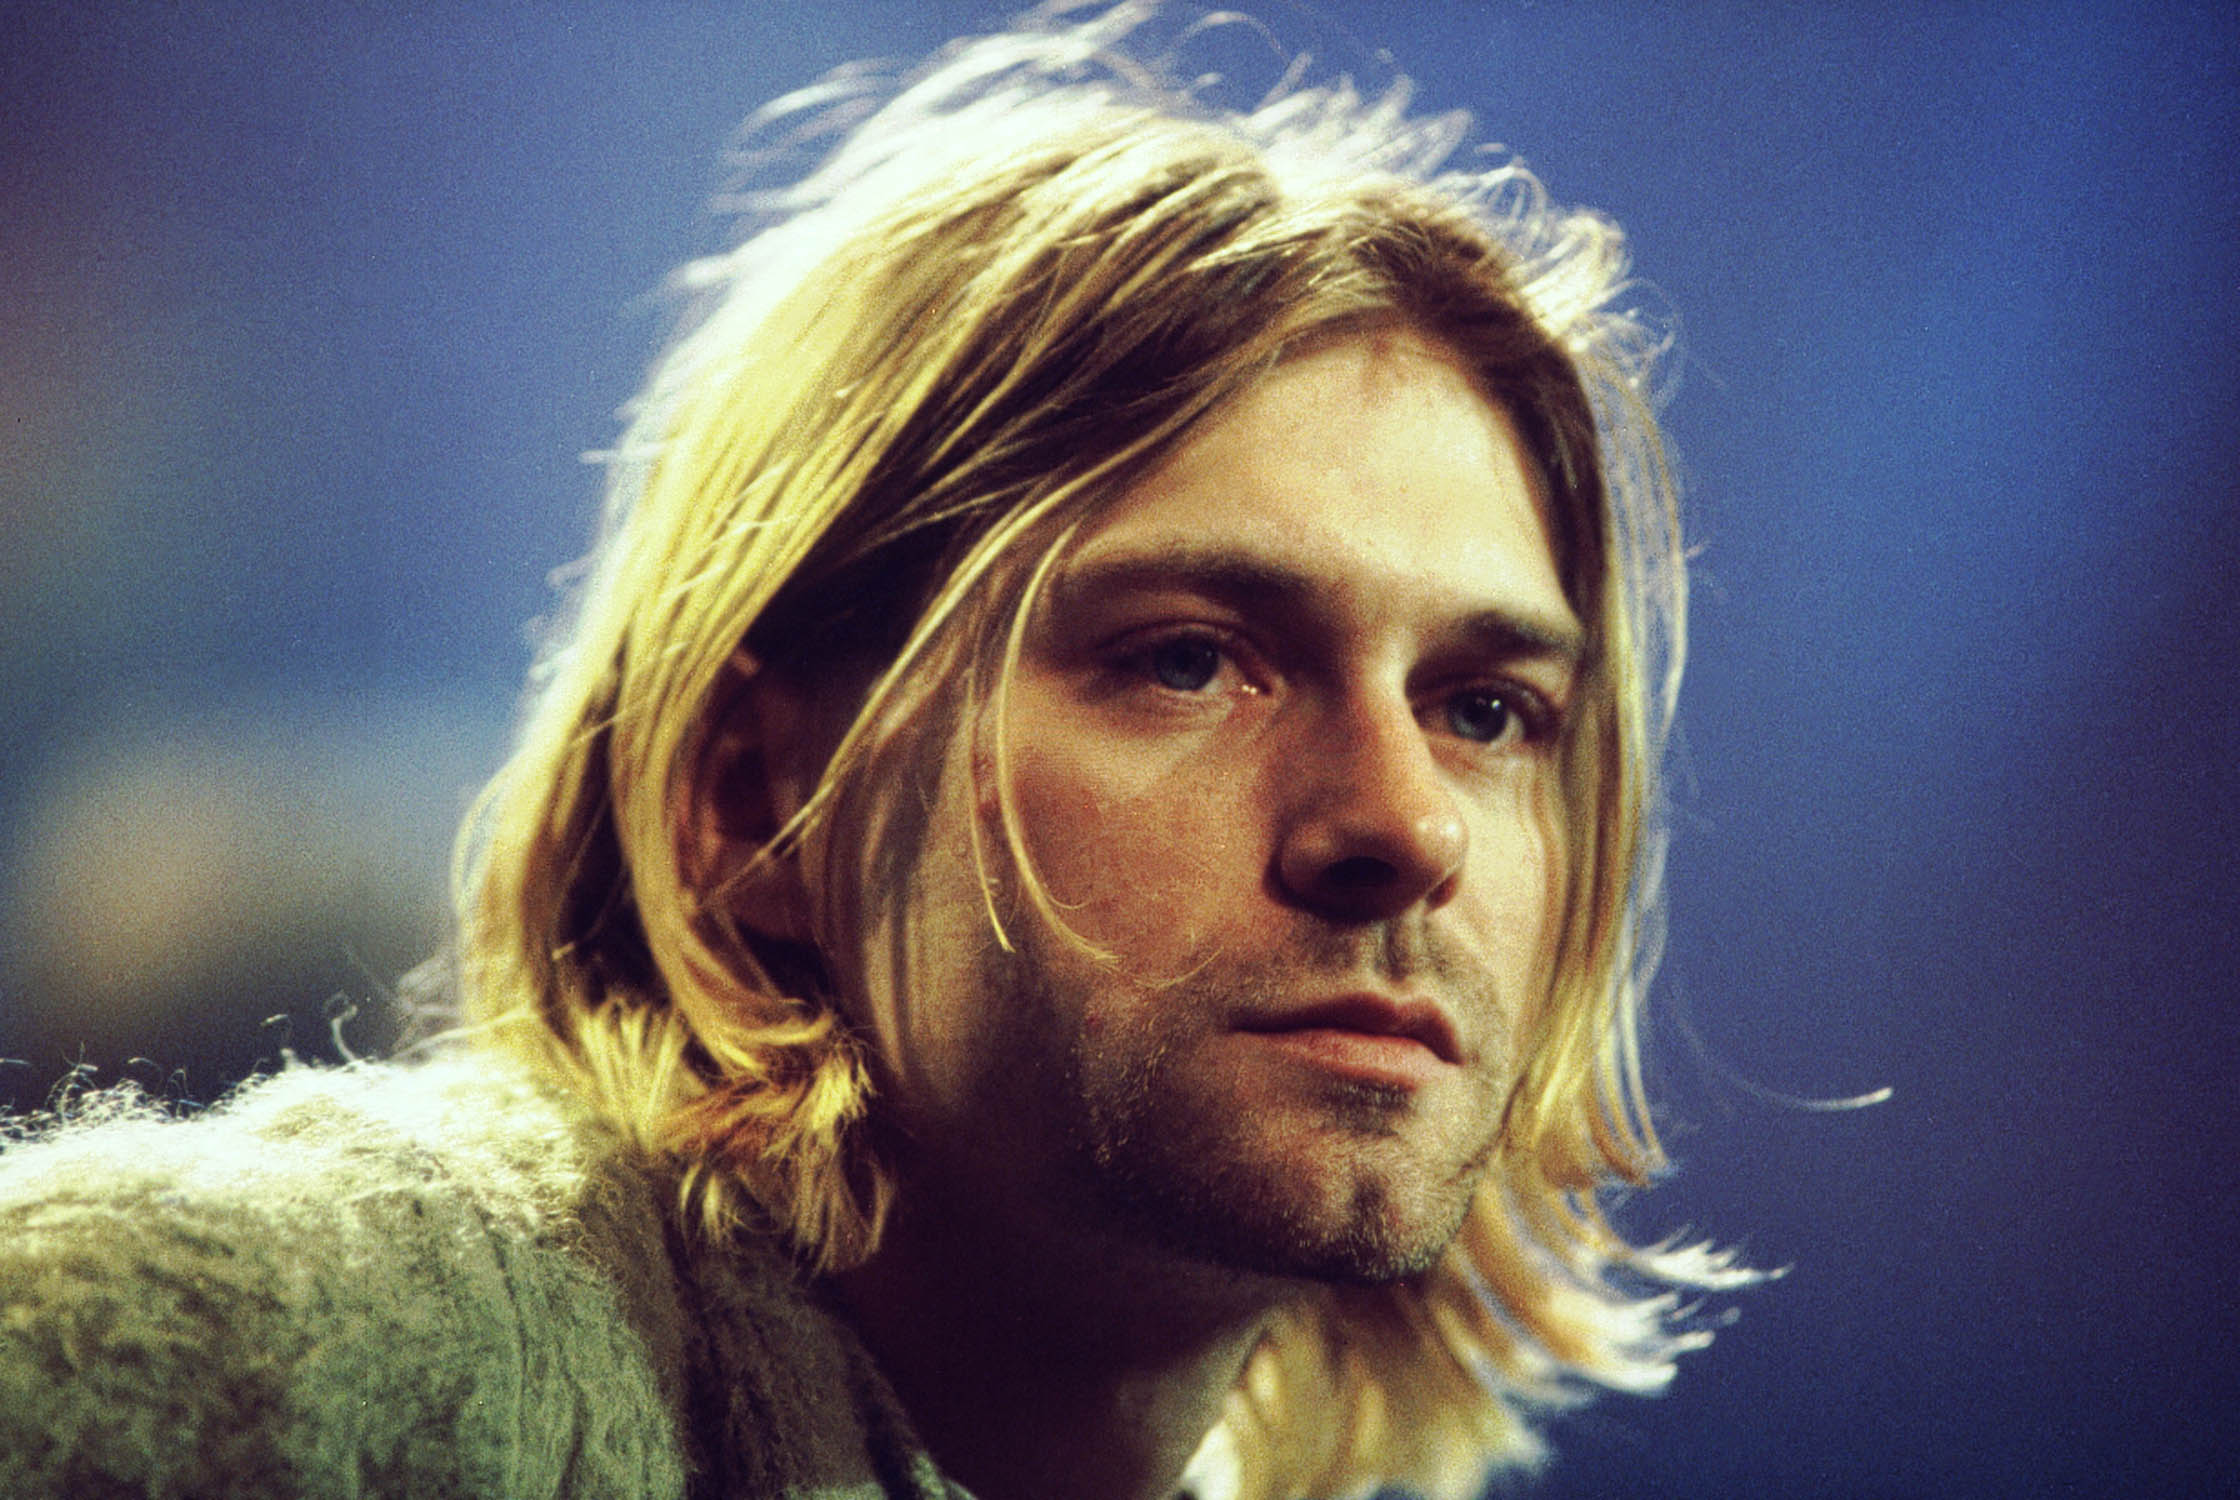 Kurt Cobain wearing a sweater